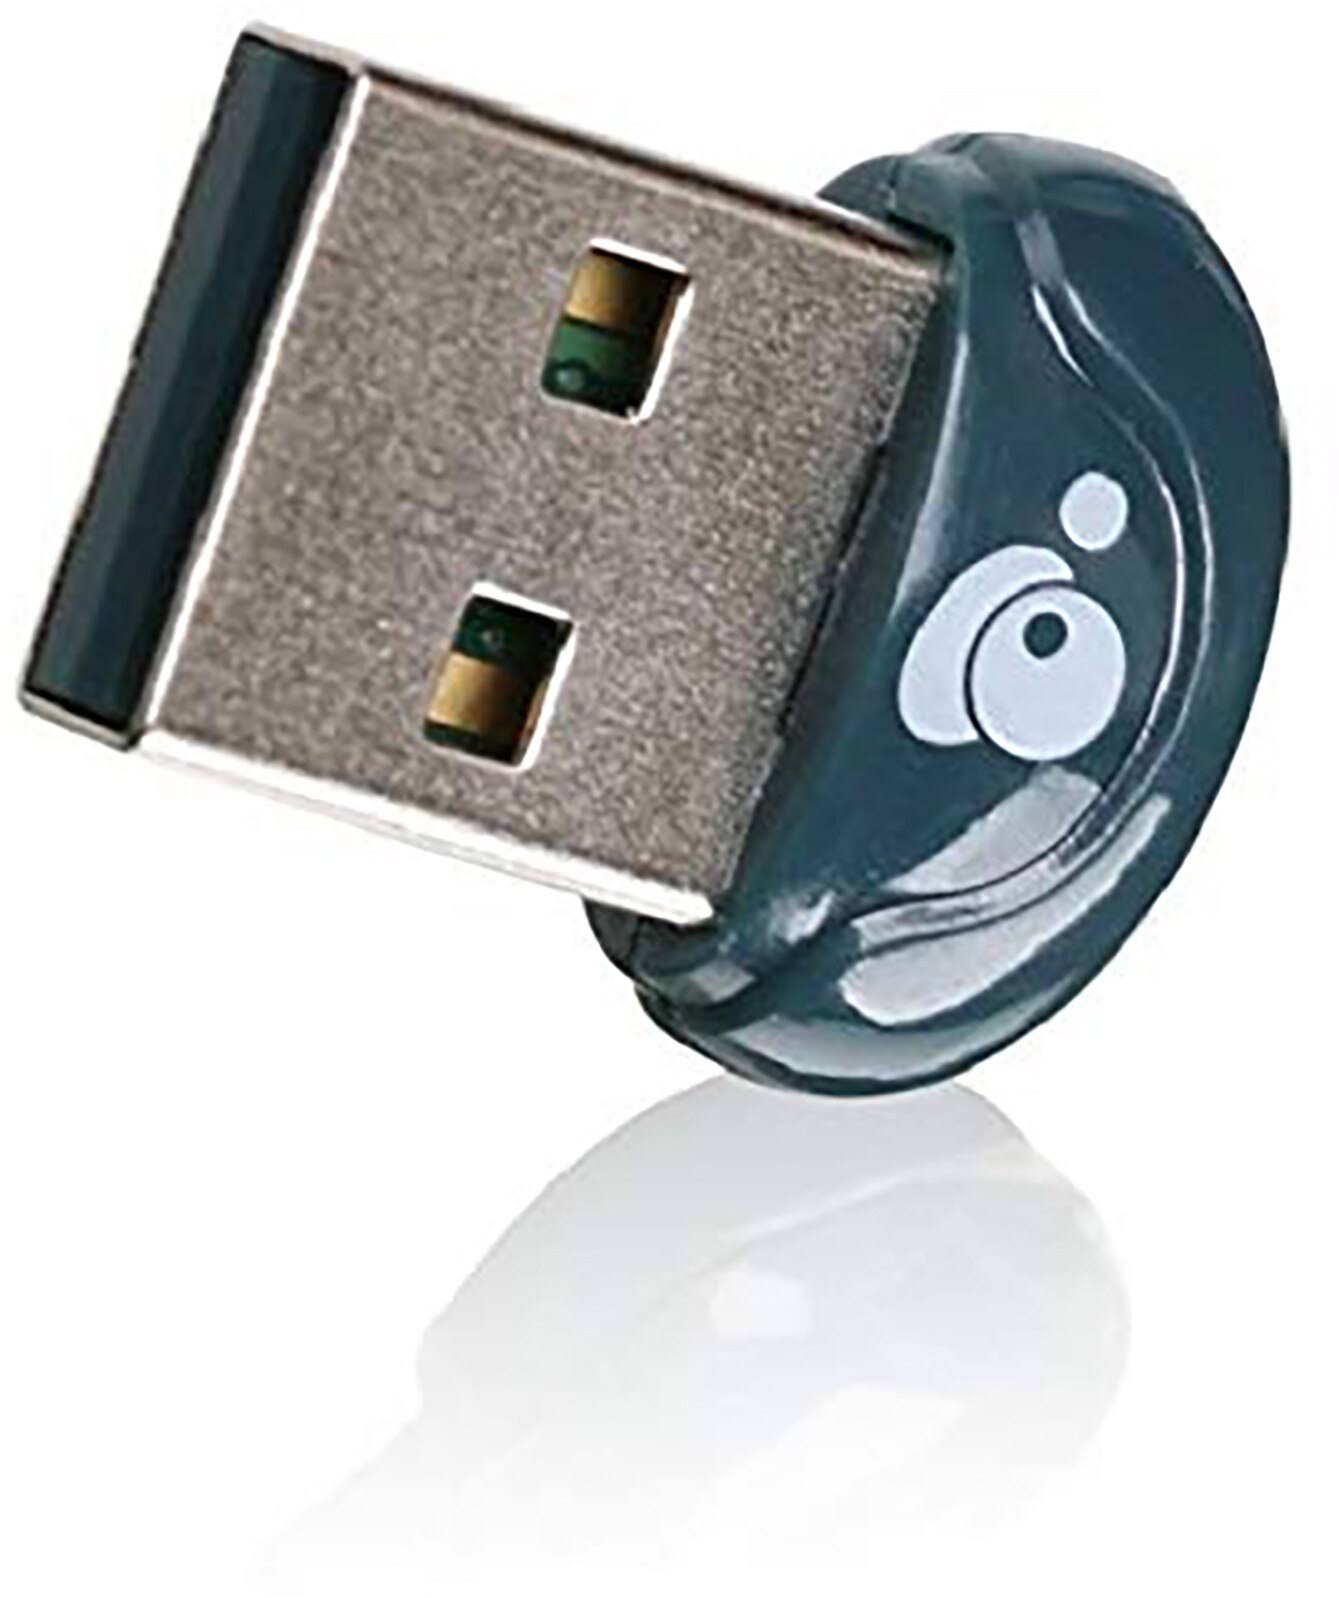 Iogear Bluetooth to Usb Adapter